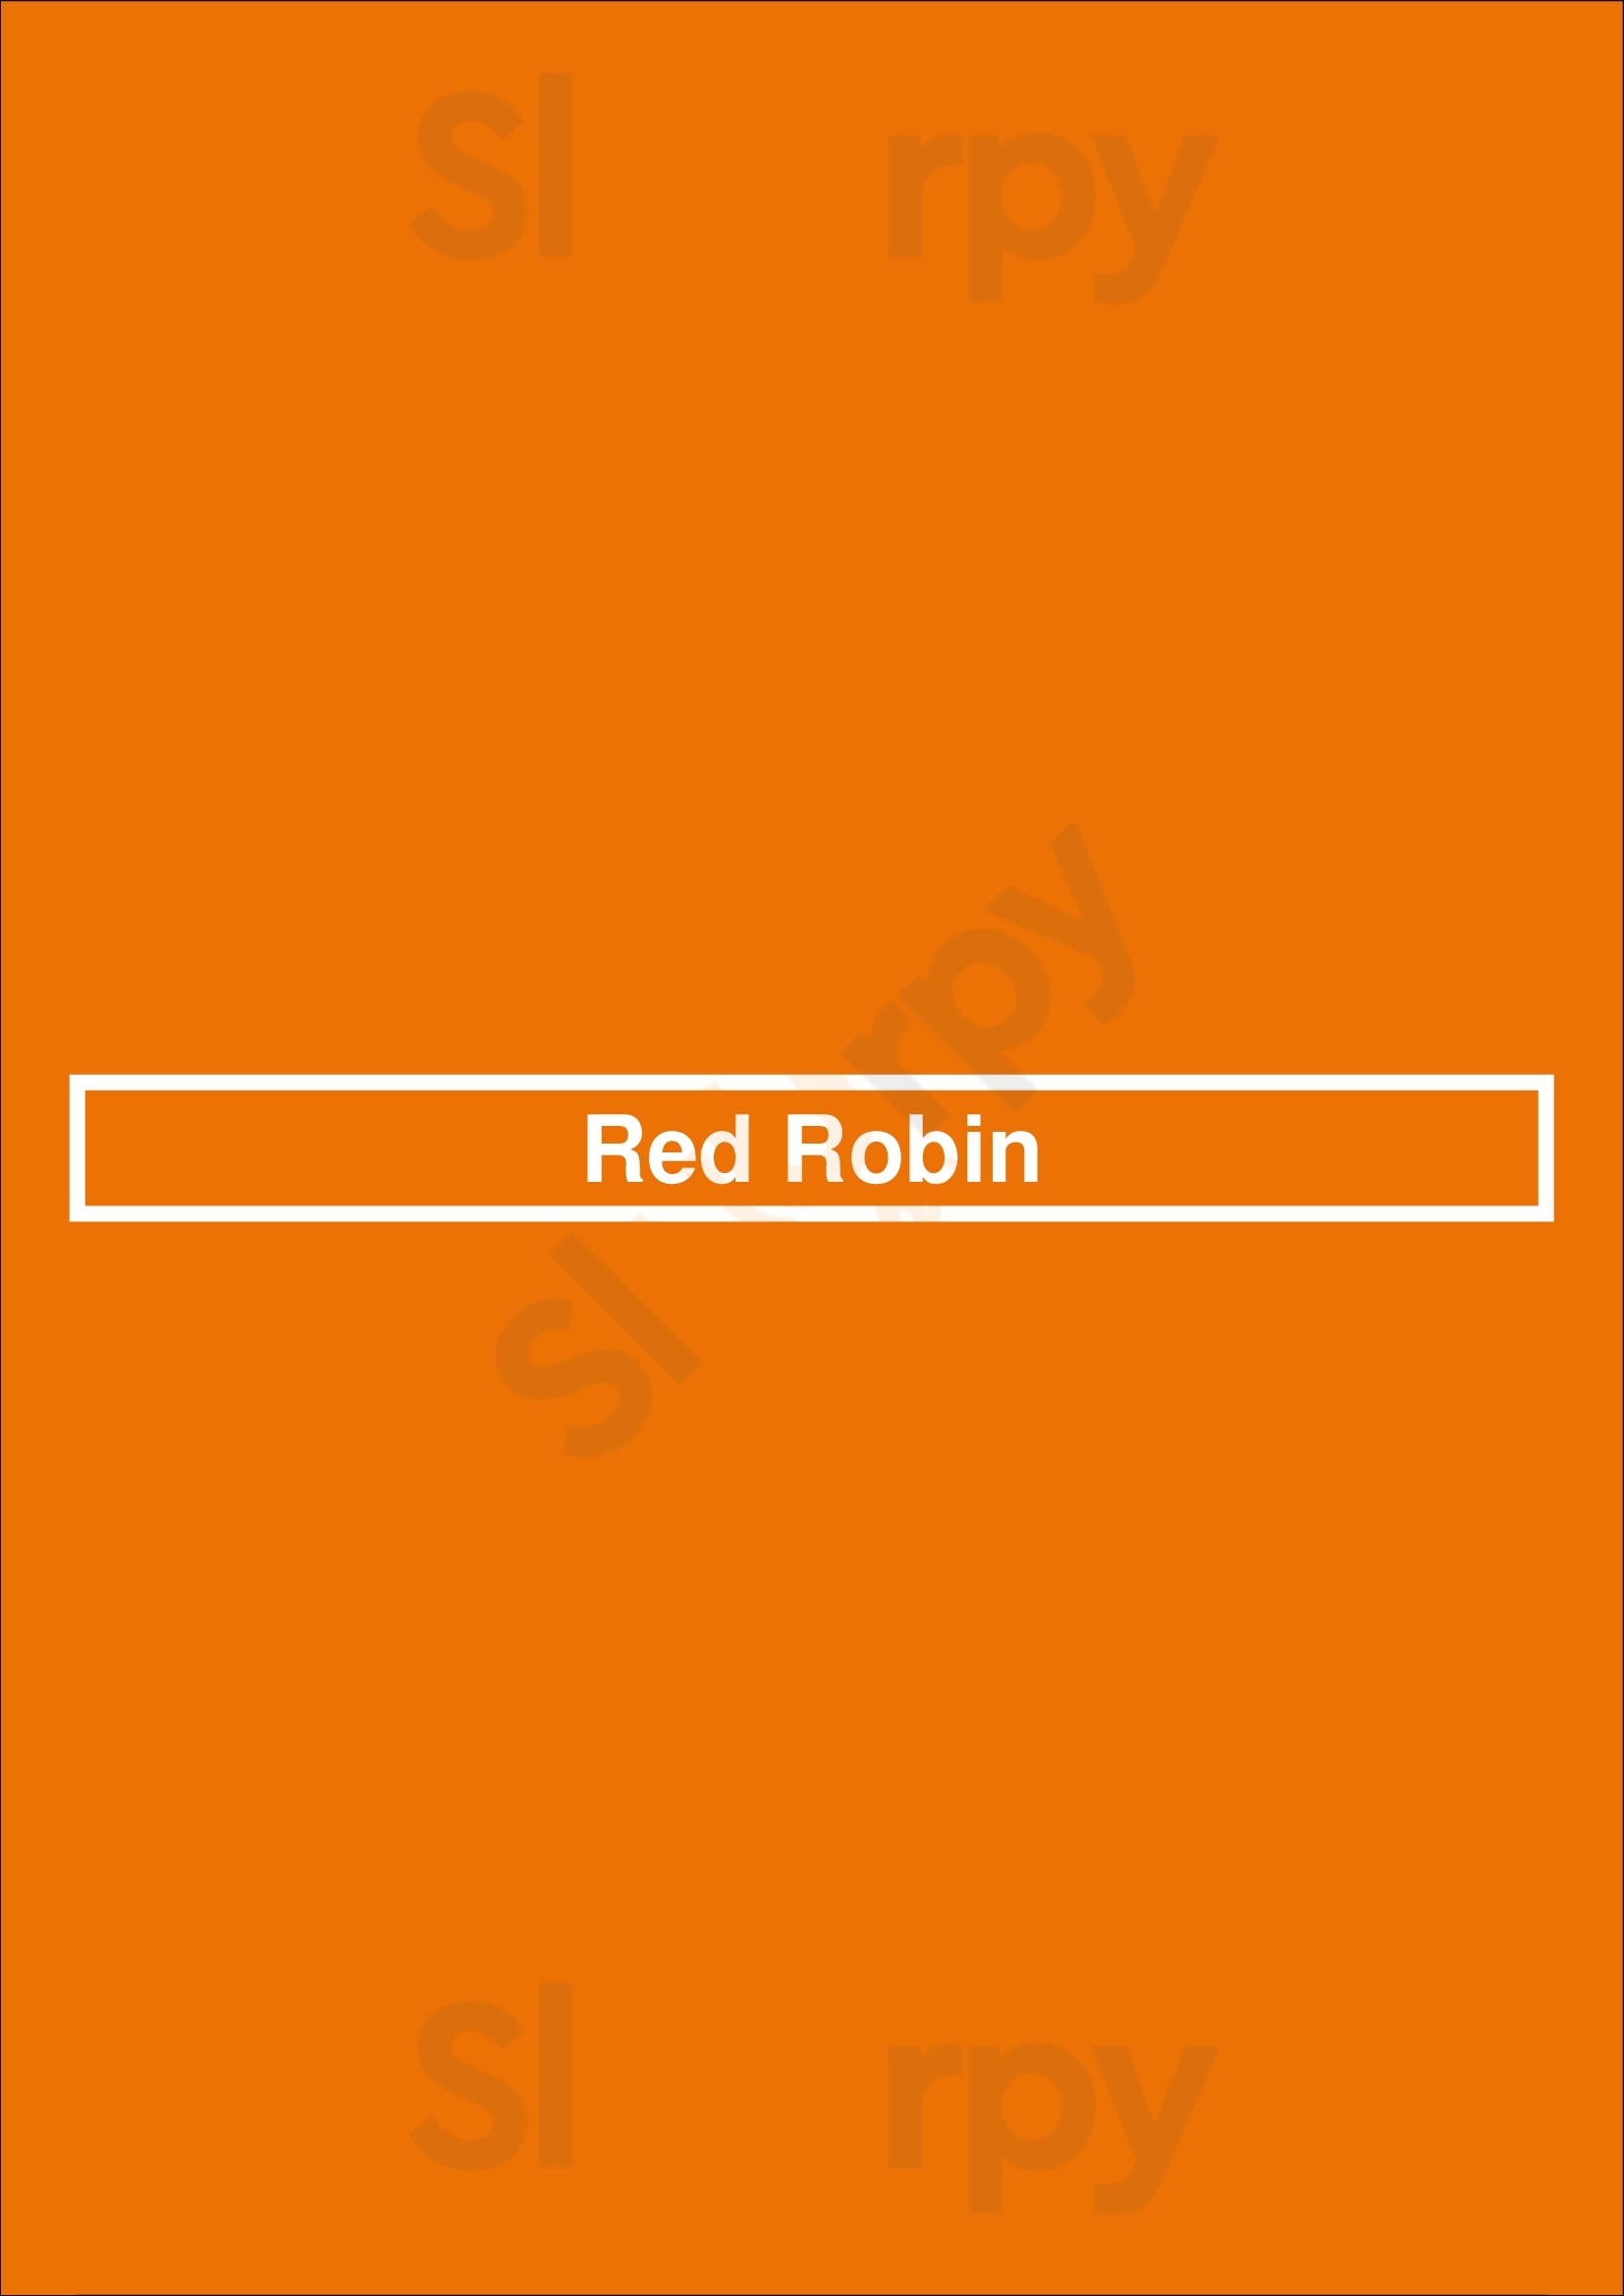 Red Robin Amherst Menu - 1